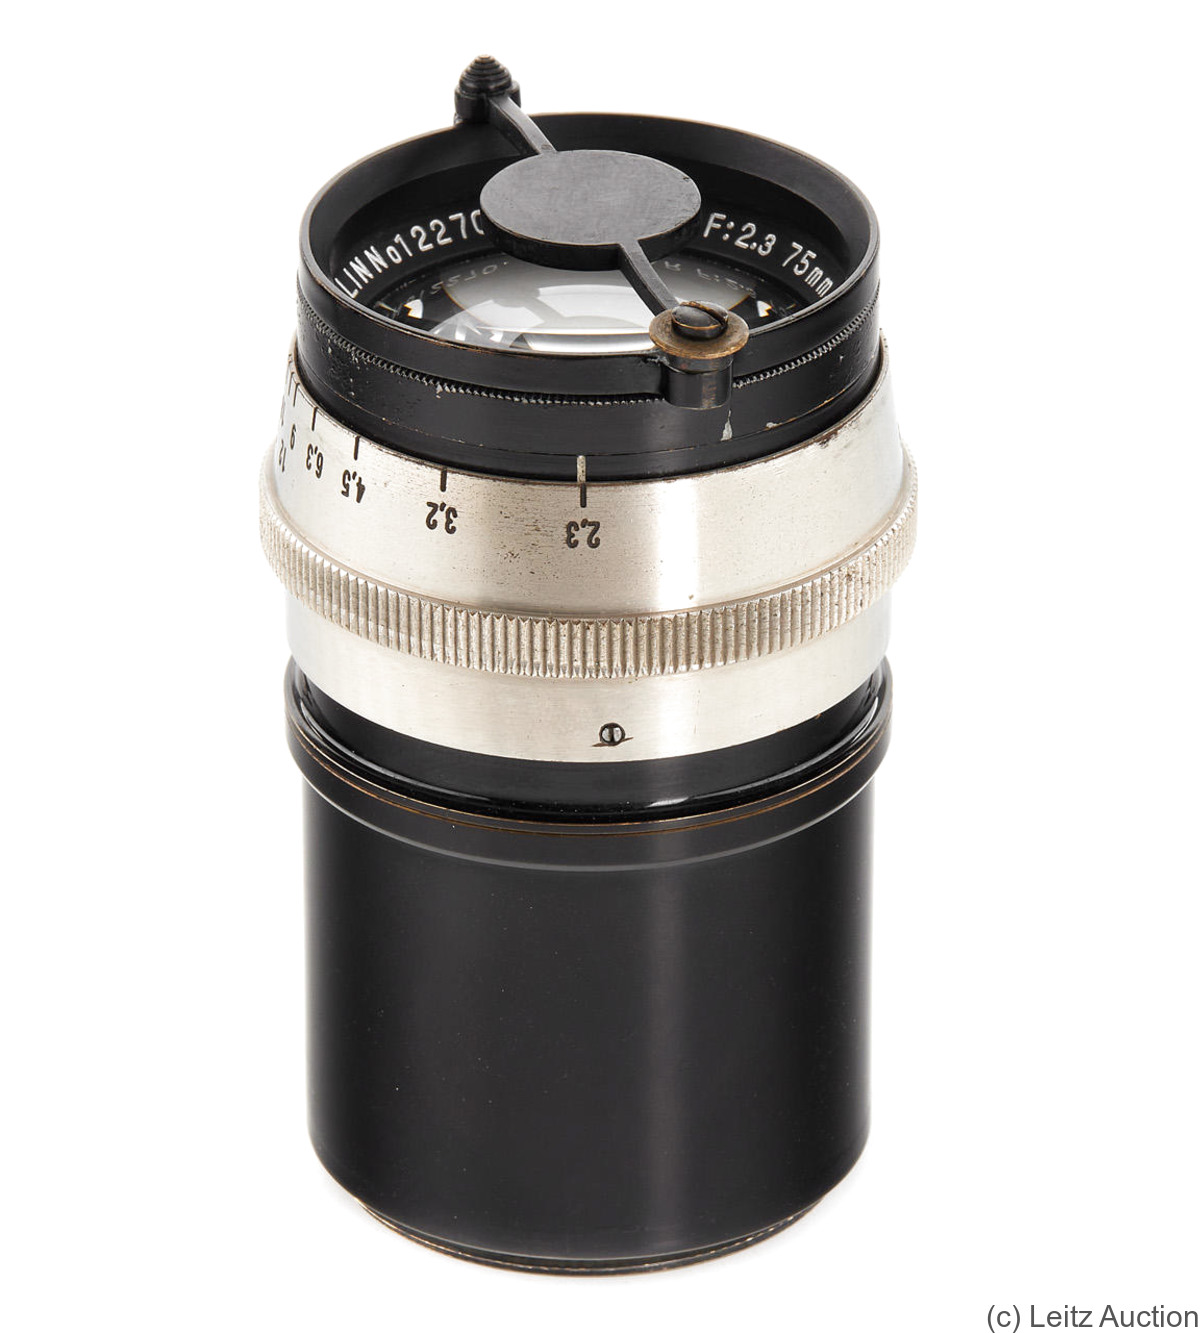 Astro Berlin: 75mm (7.5cm) f2.3 Tachar (M39) camera